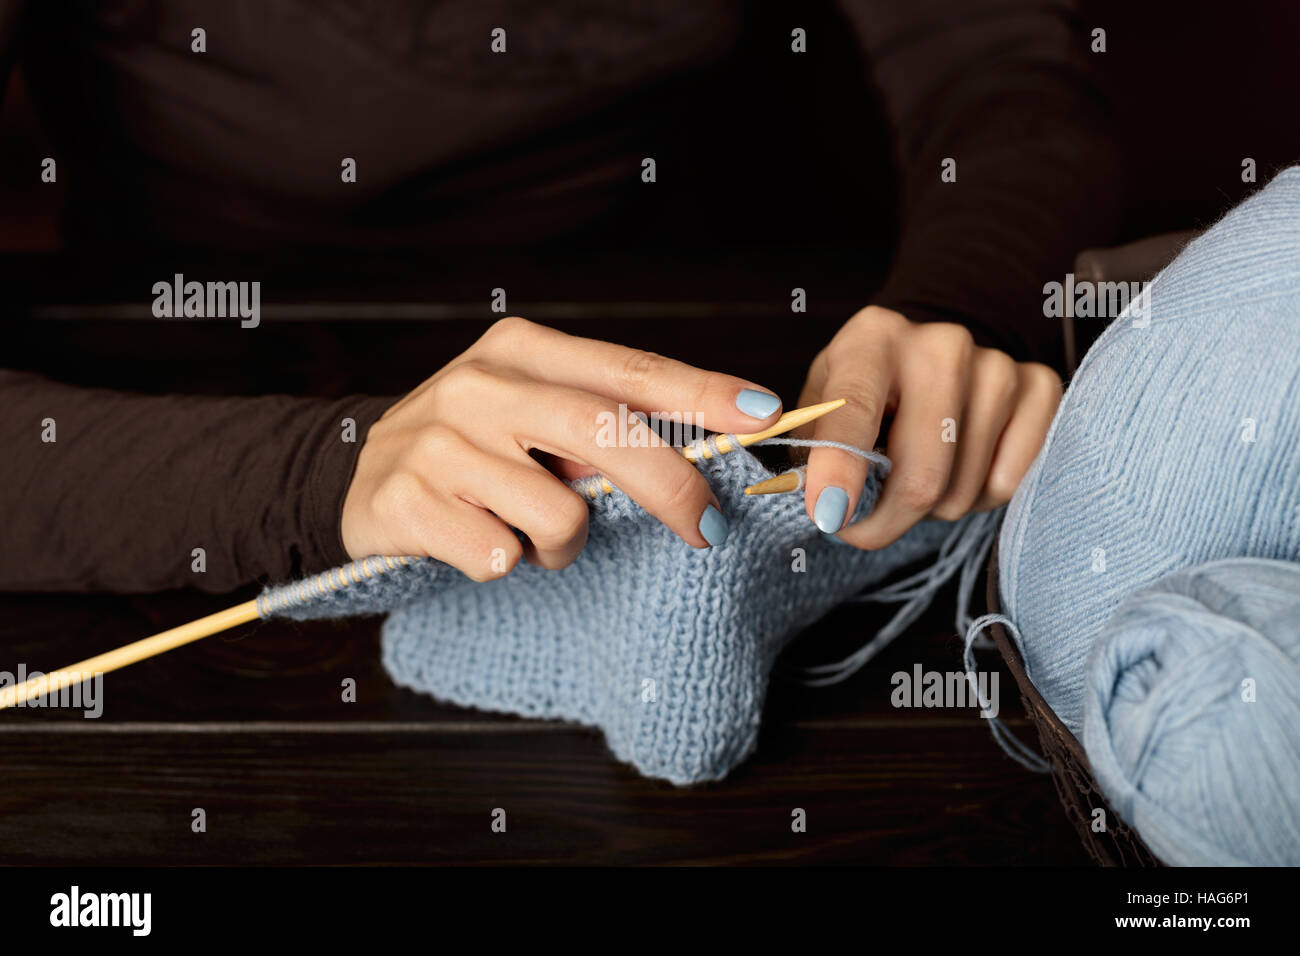 Female hands knitting from light blue yarn. Stock Photo